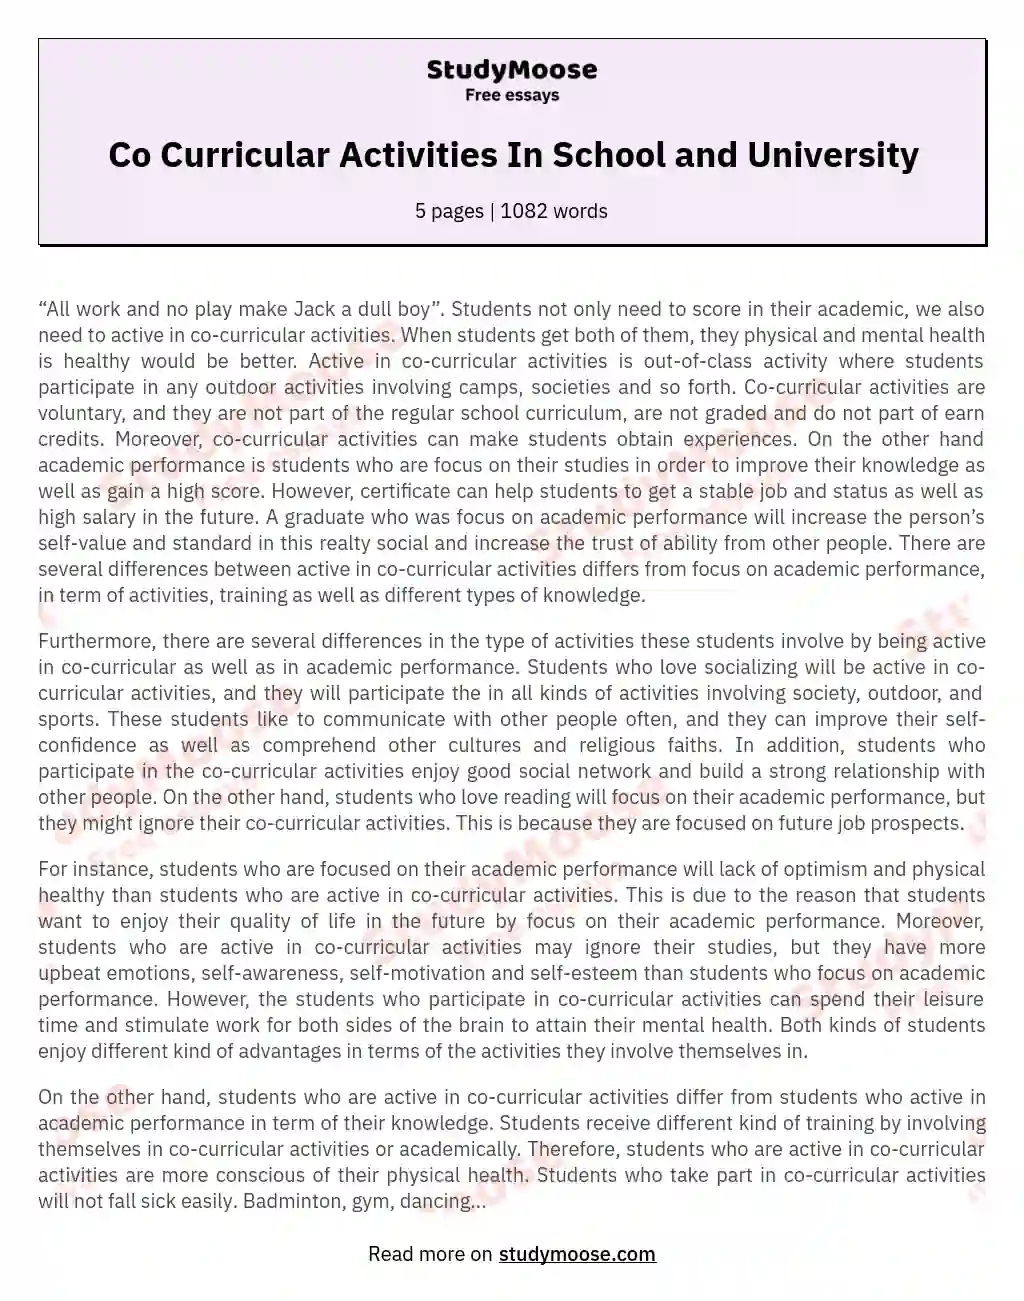 Co Curricular Activities In School and University essay